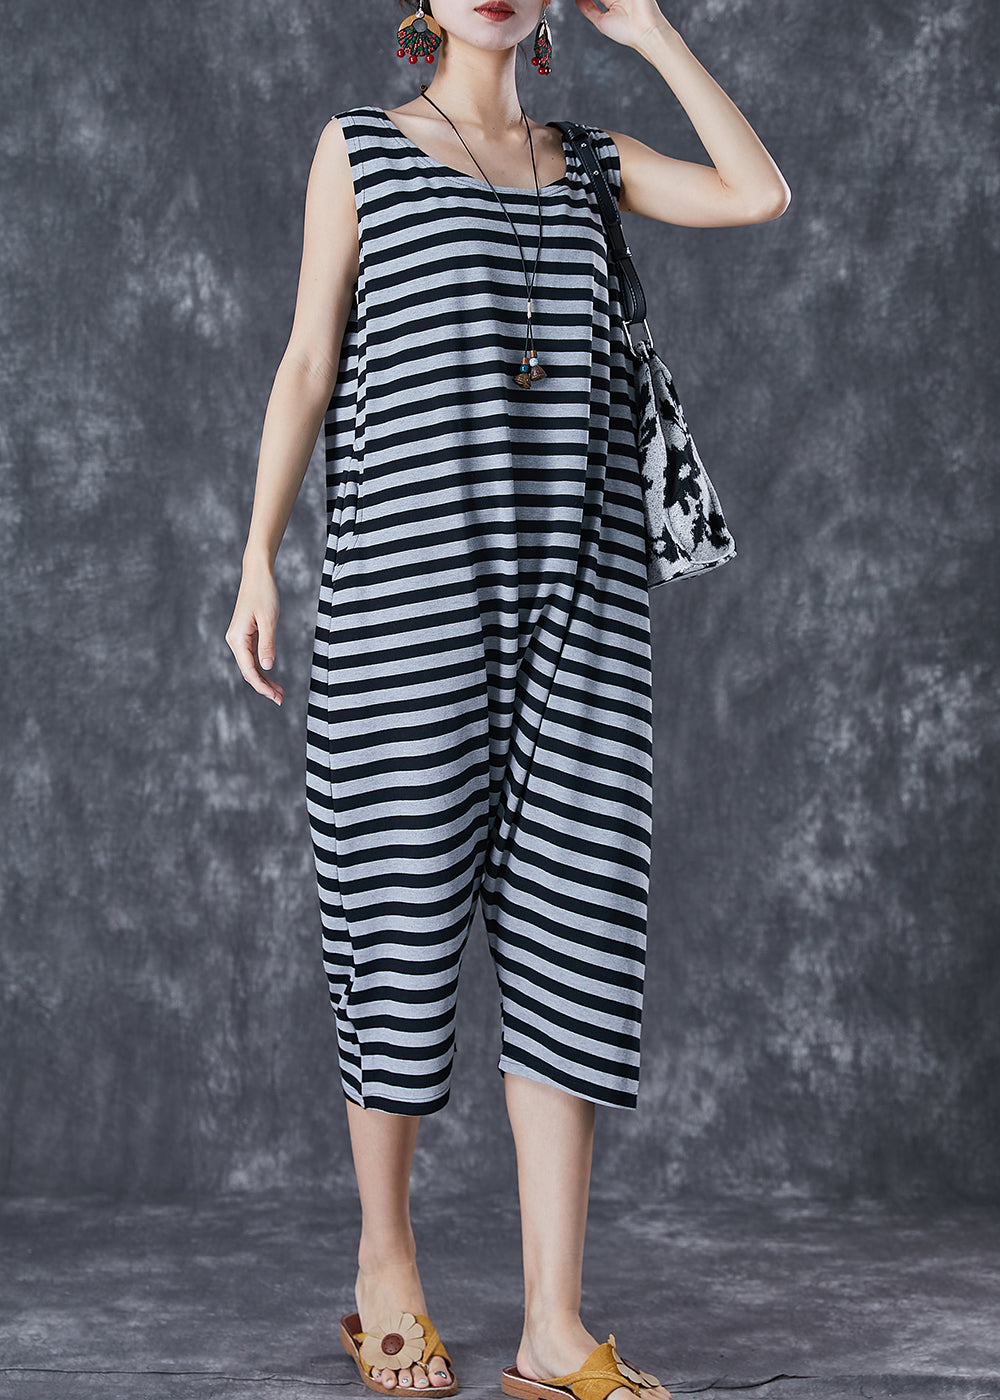 Modern Grey O-Neck Striped Cotton Overalls Jumpsuit Sleeveless LY7096 - fabuloryshop